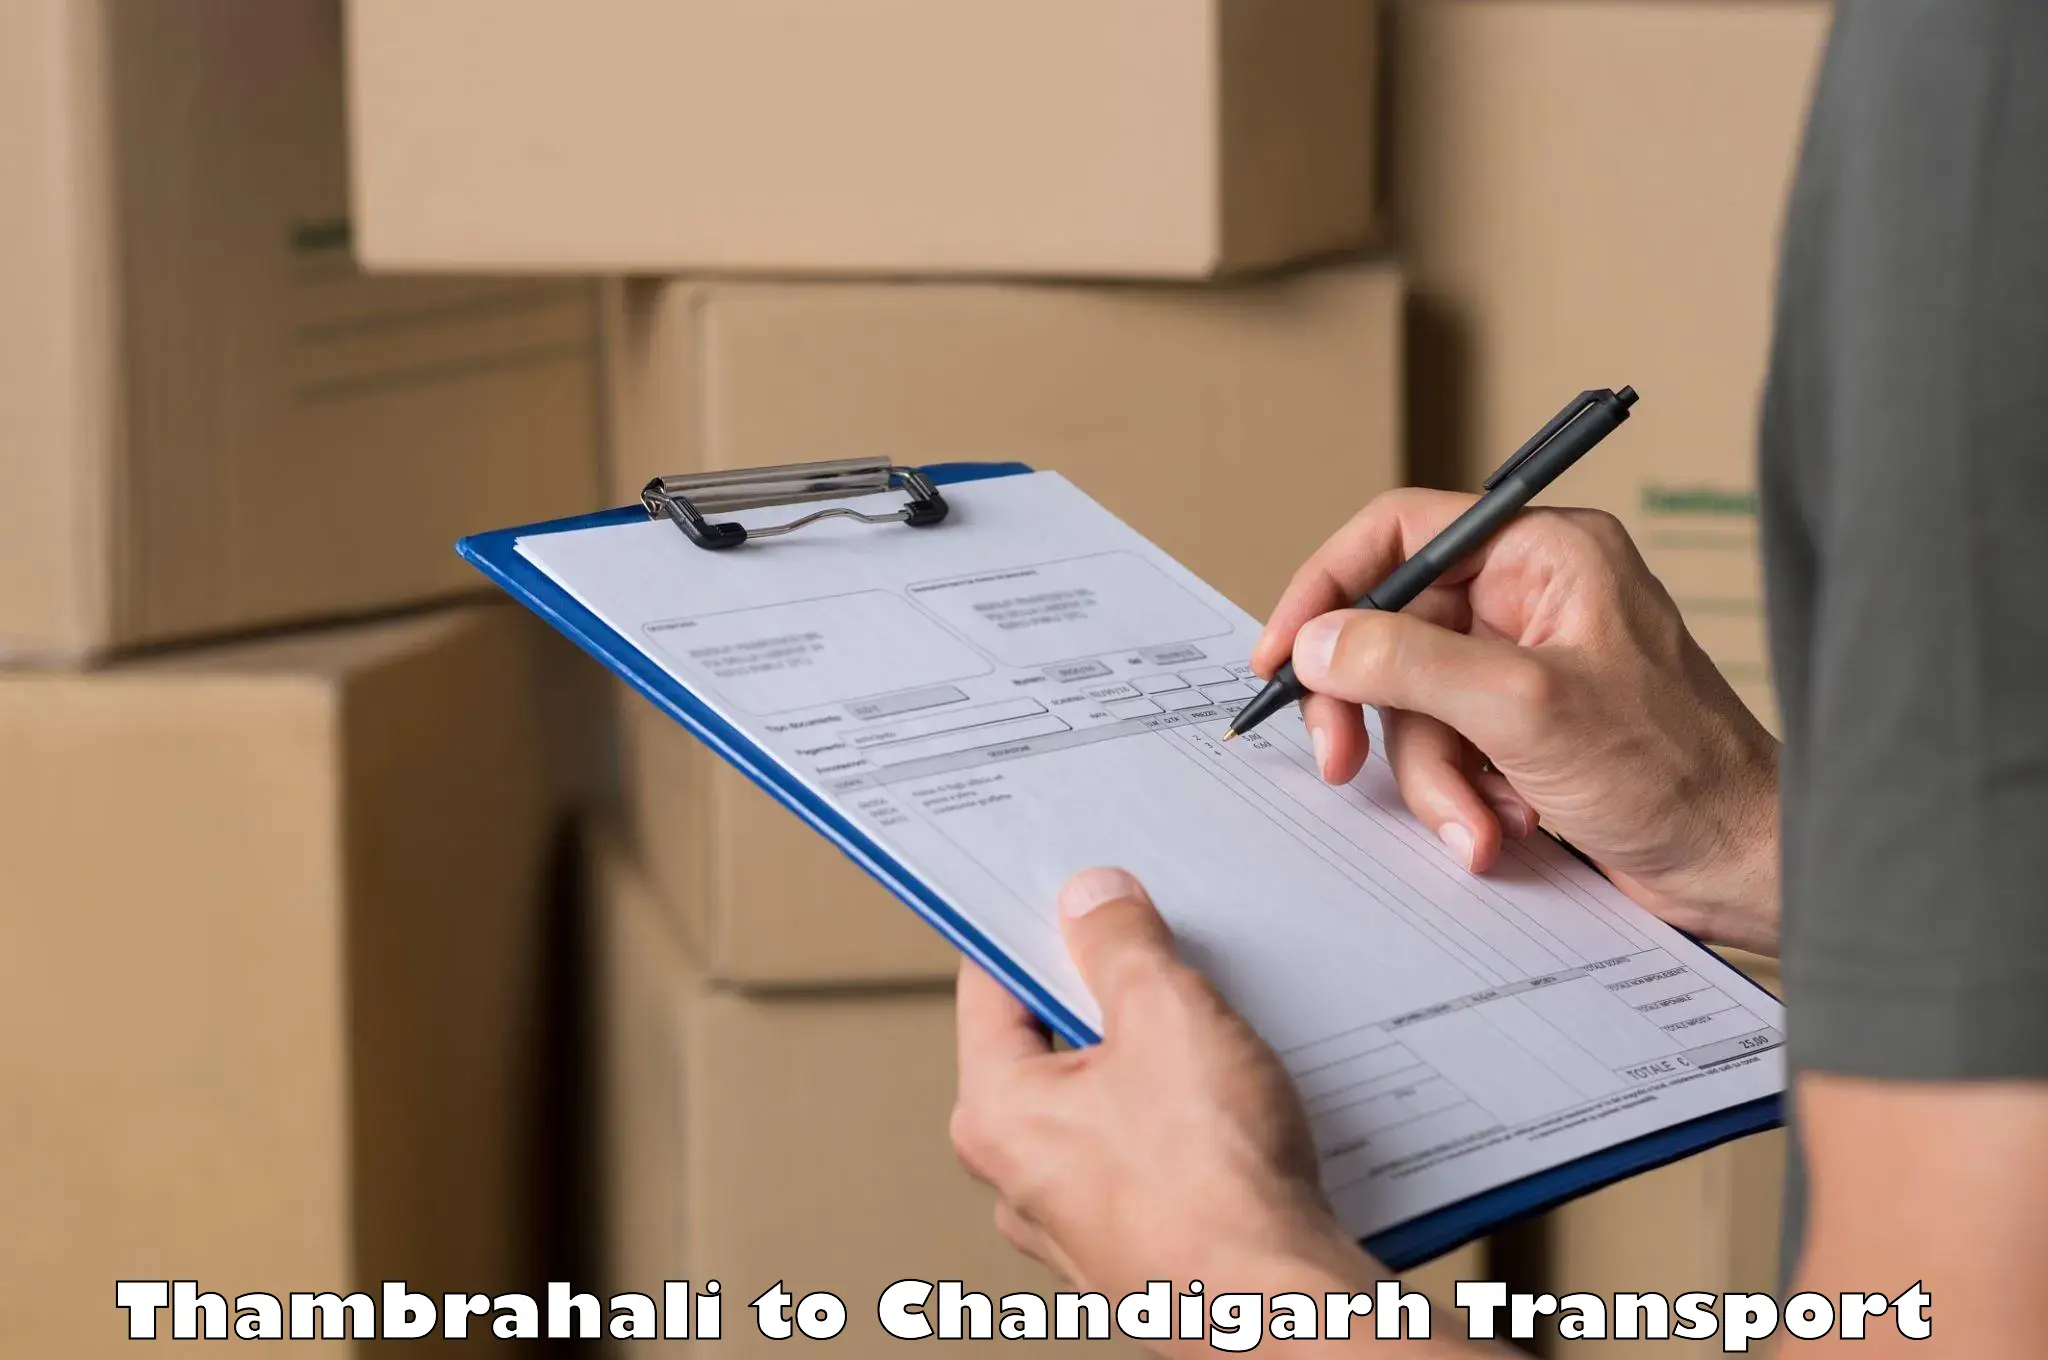 Daily transport service Thambrahali to Chandigarh